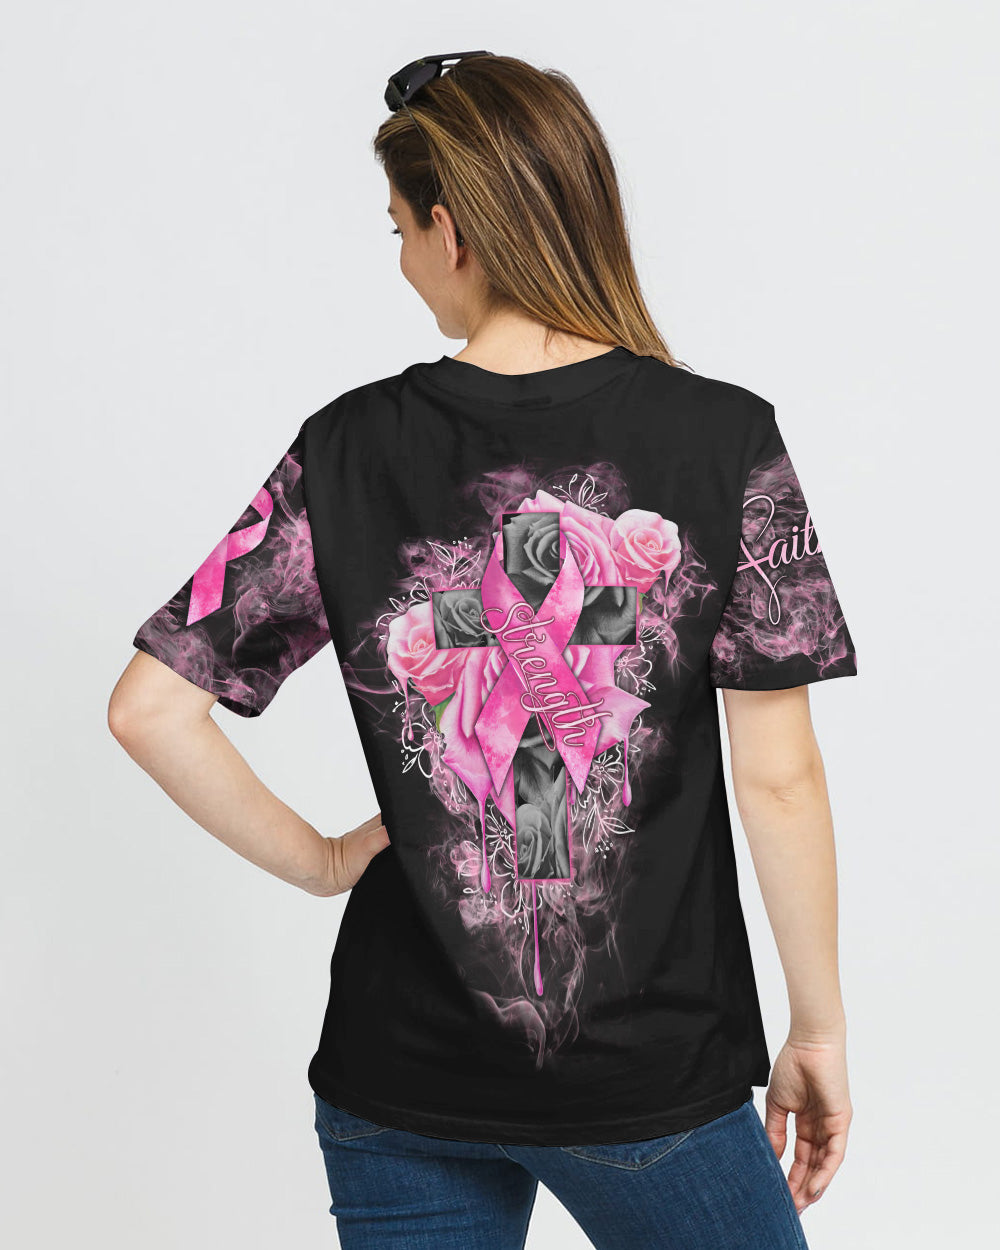 Strength Rose Cross Ribbon Women's Breast Cancer Awareness Tshirt